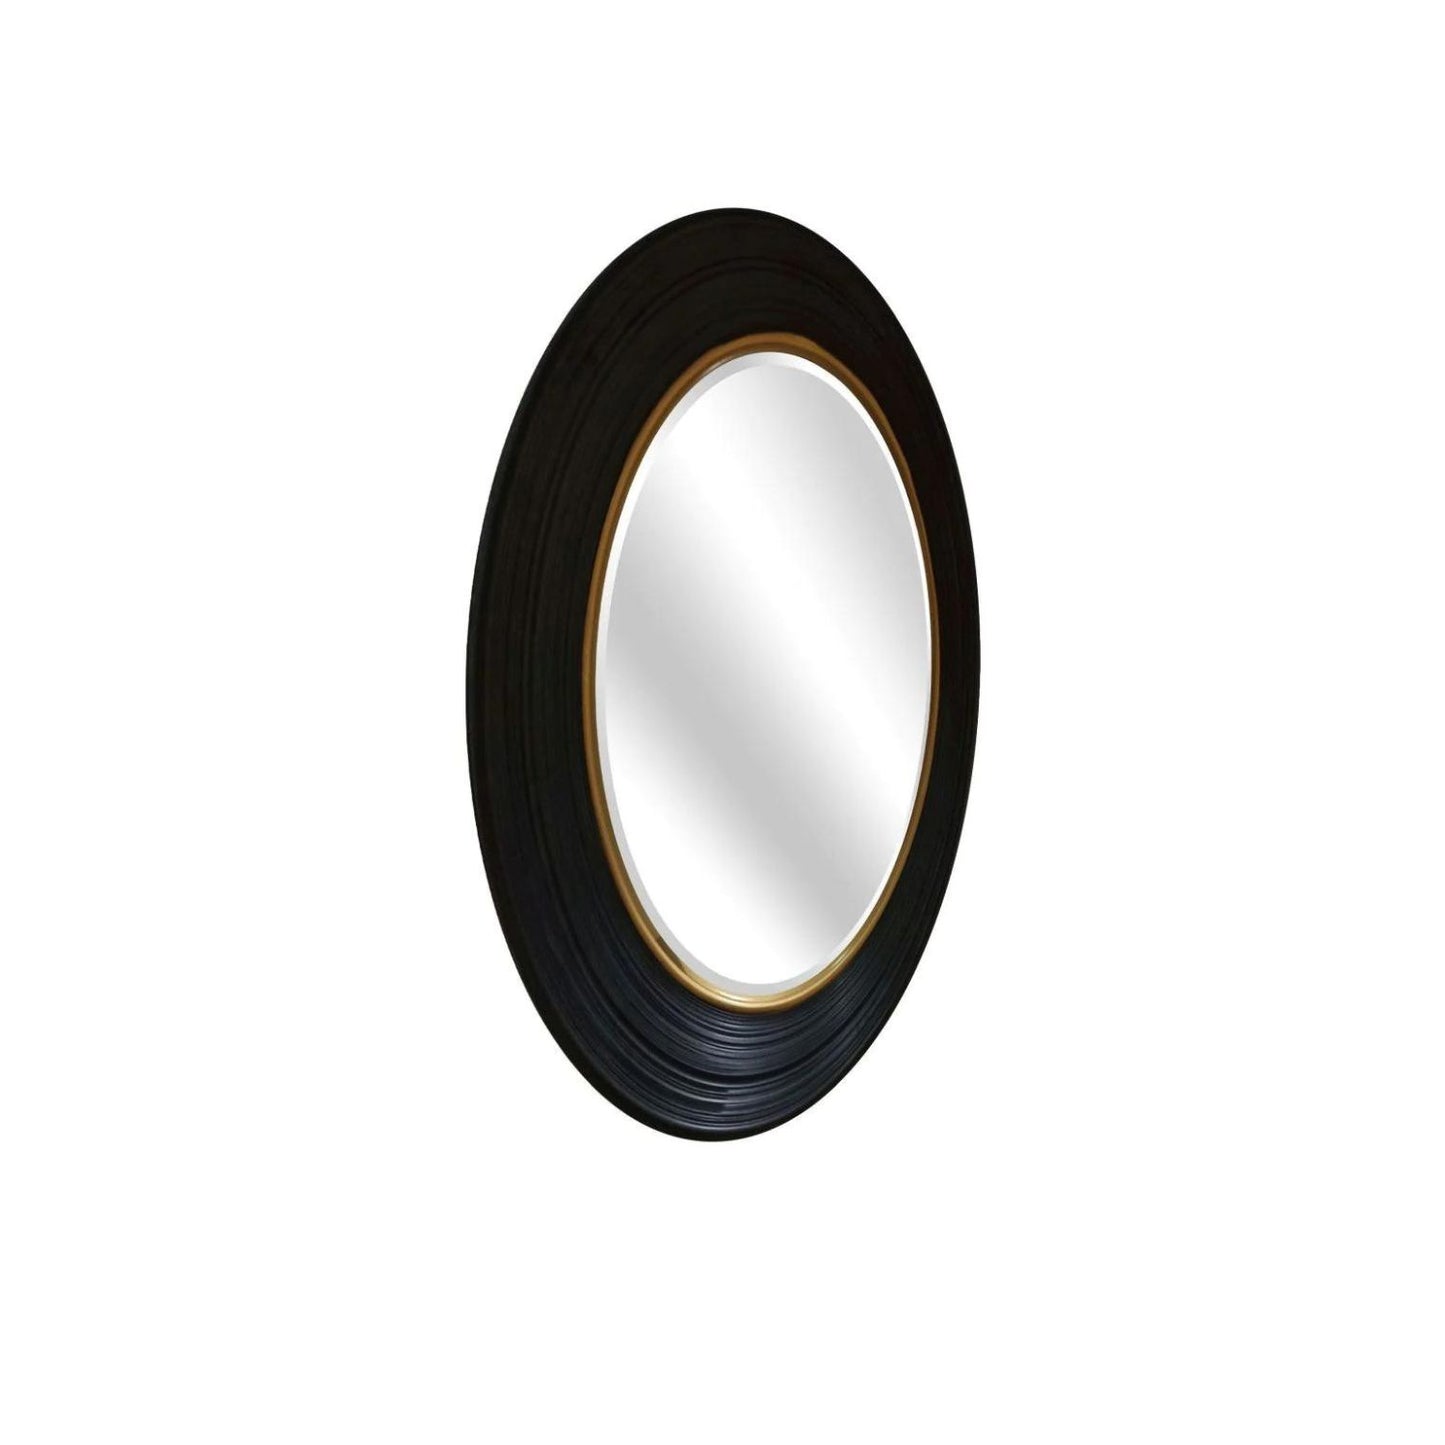 Black circular mirror